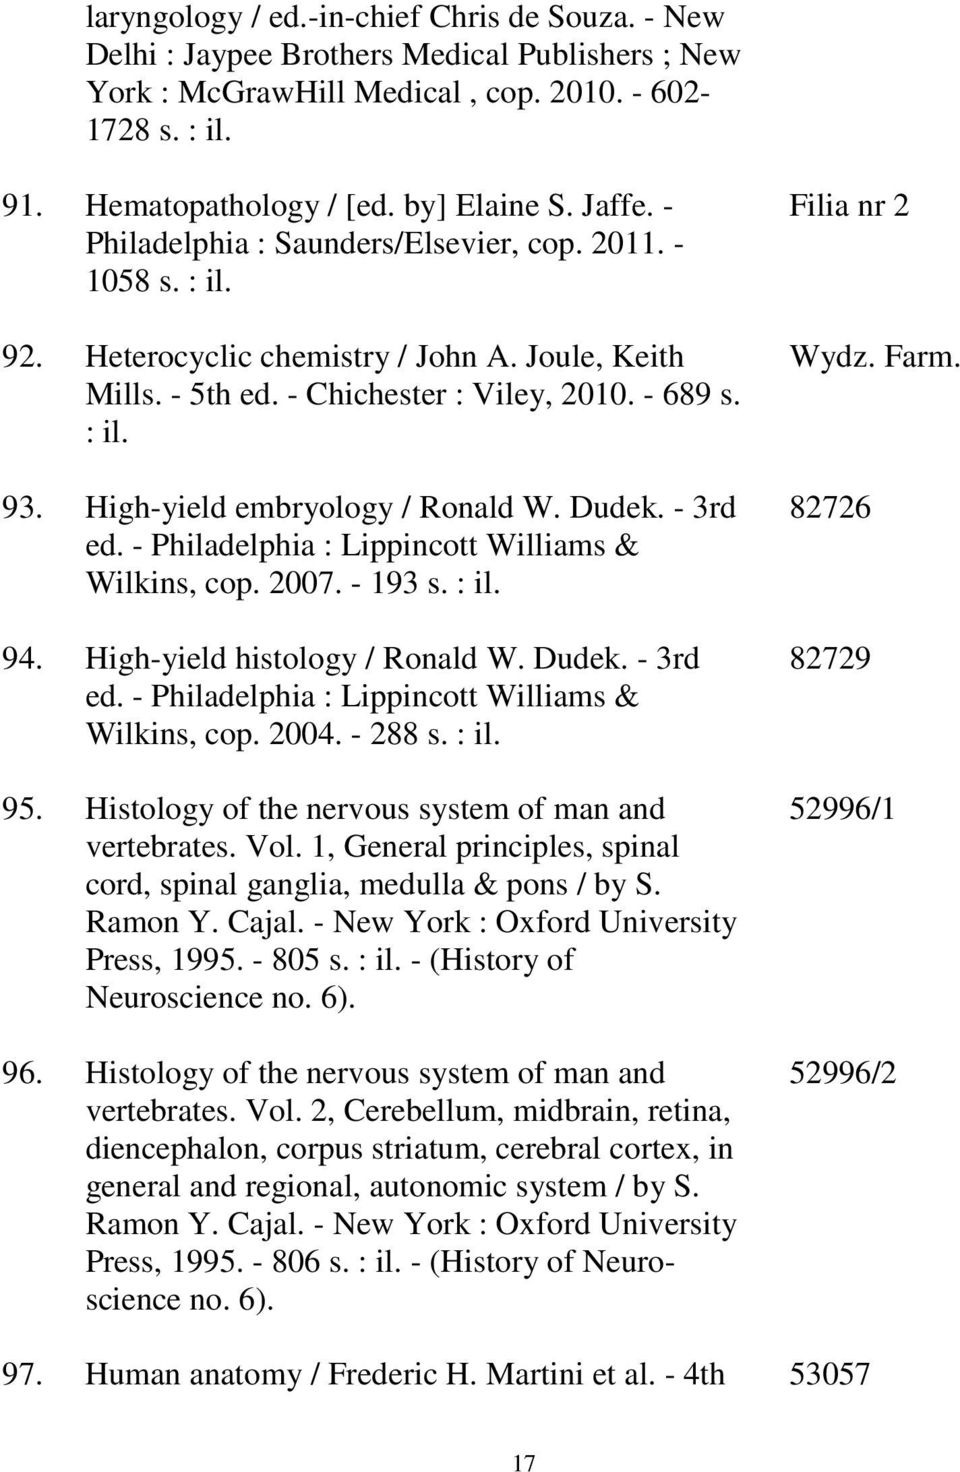 High-yield embryology / Ronald W. Dudek. - 3rd ed. - Philadelphia : Lippincott Williams & Wilkins, cop. 2007. - 193 s. : il. 94. High-yield histology / Ronald W. Dudek. - 3rd ed. - Philadelphia : Lippincott Williams & Wilkins, cop. 2004.